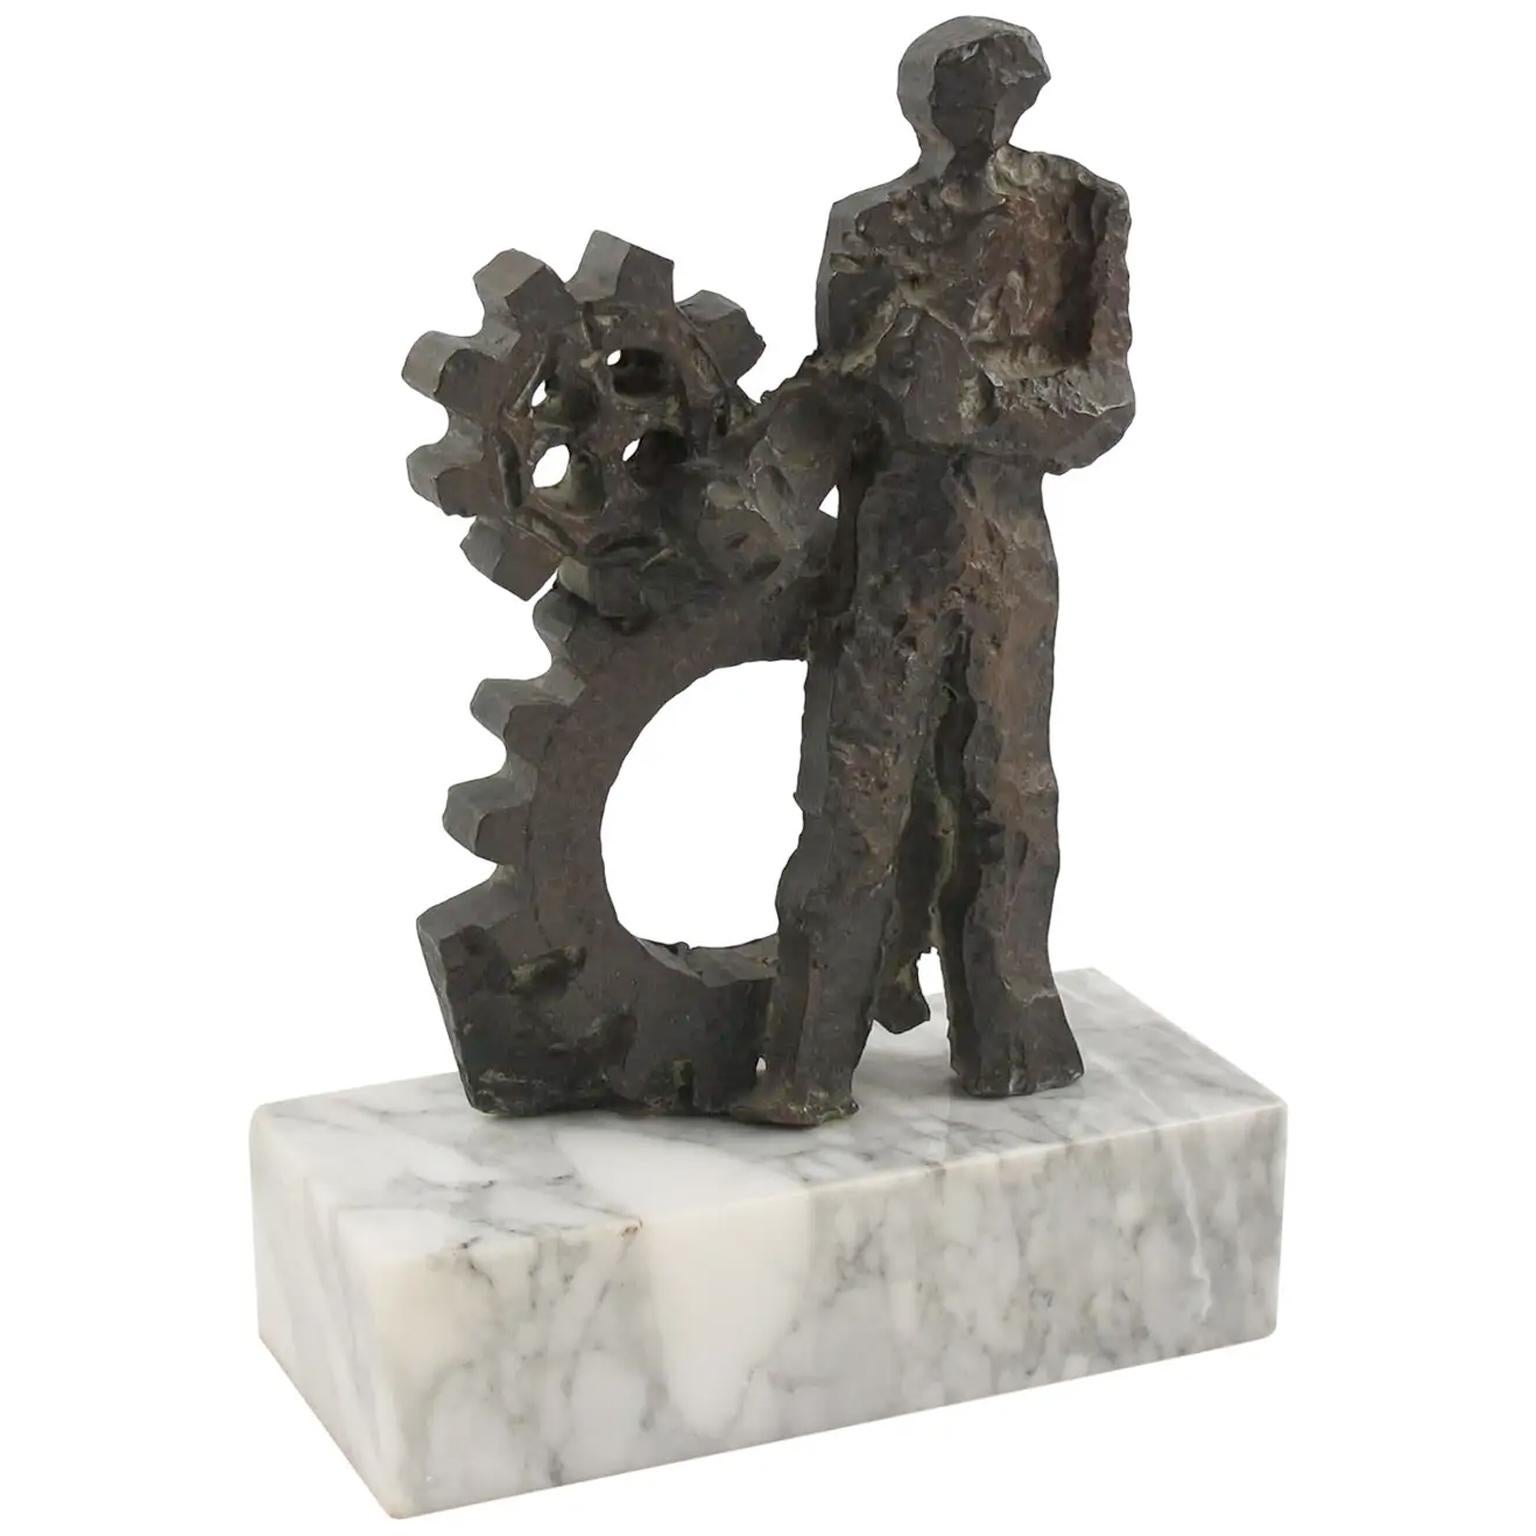 Unknown Figurative Sculpture - Man and Machine, Brutalist Bronze Sculpture on Marble Base, 1970s